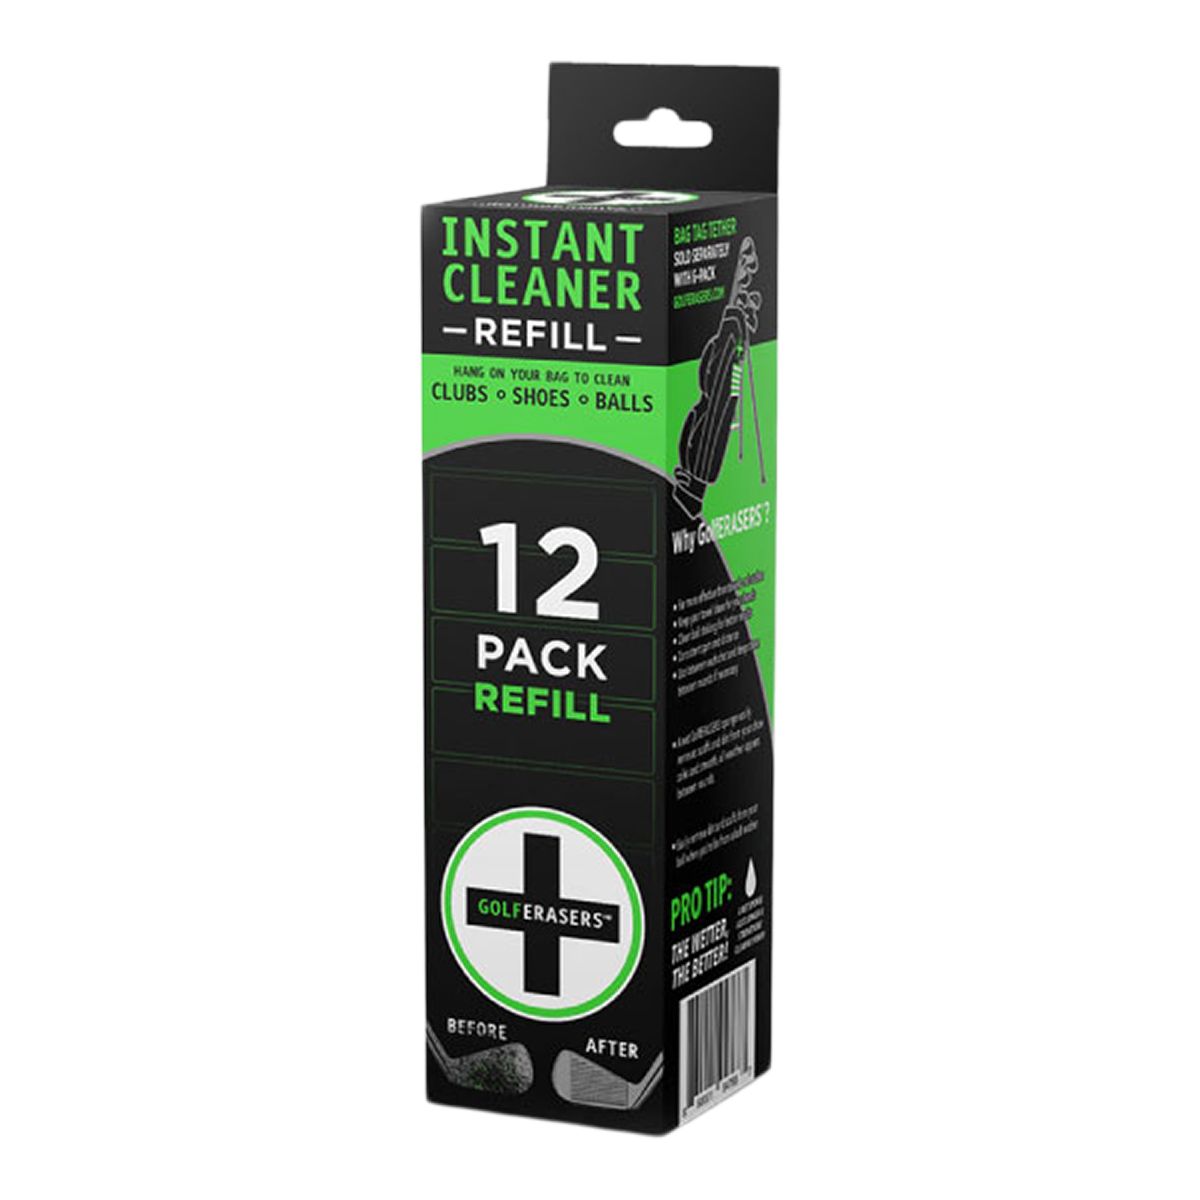 Golf Eraser Instant Golf Cleaner Refill - 12 Pack